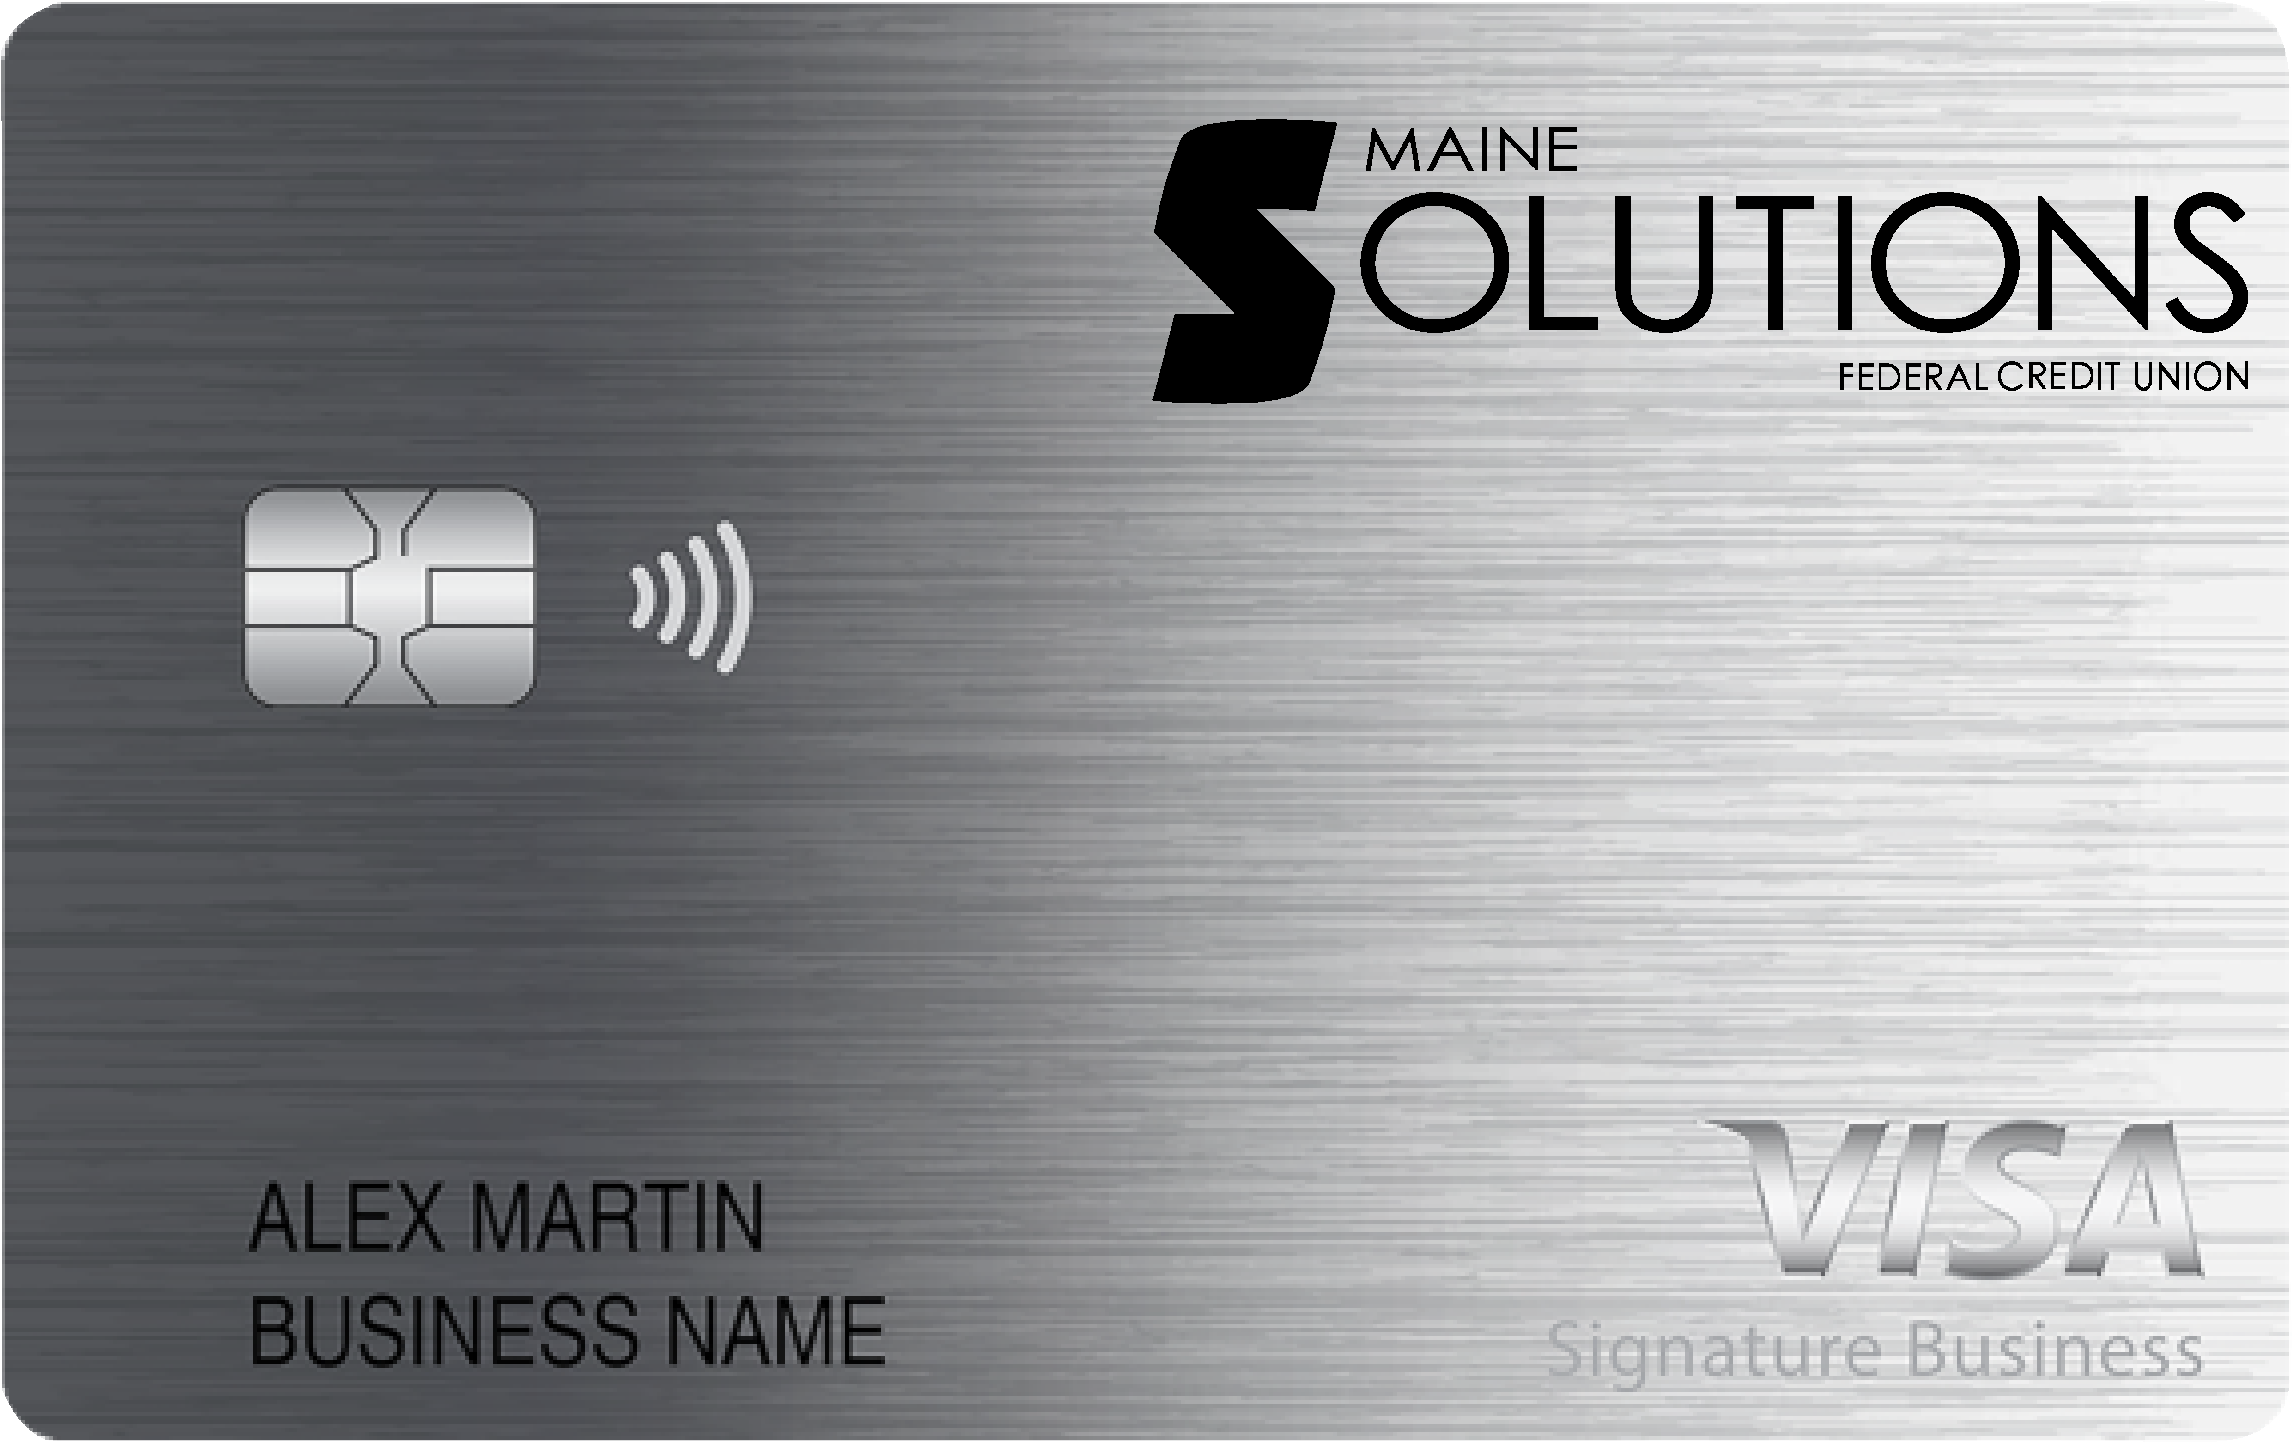 Maine Solutions FCU Smart Business Rewards Card